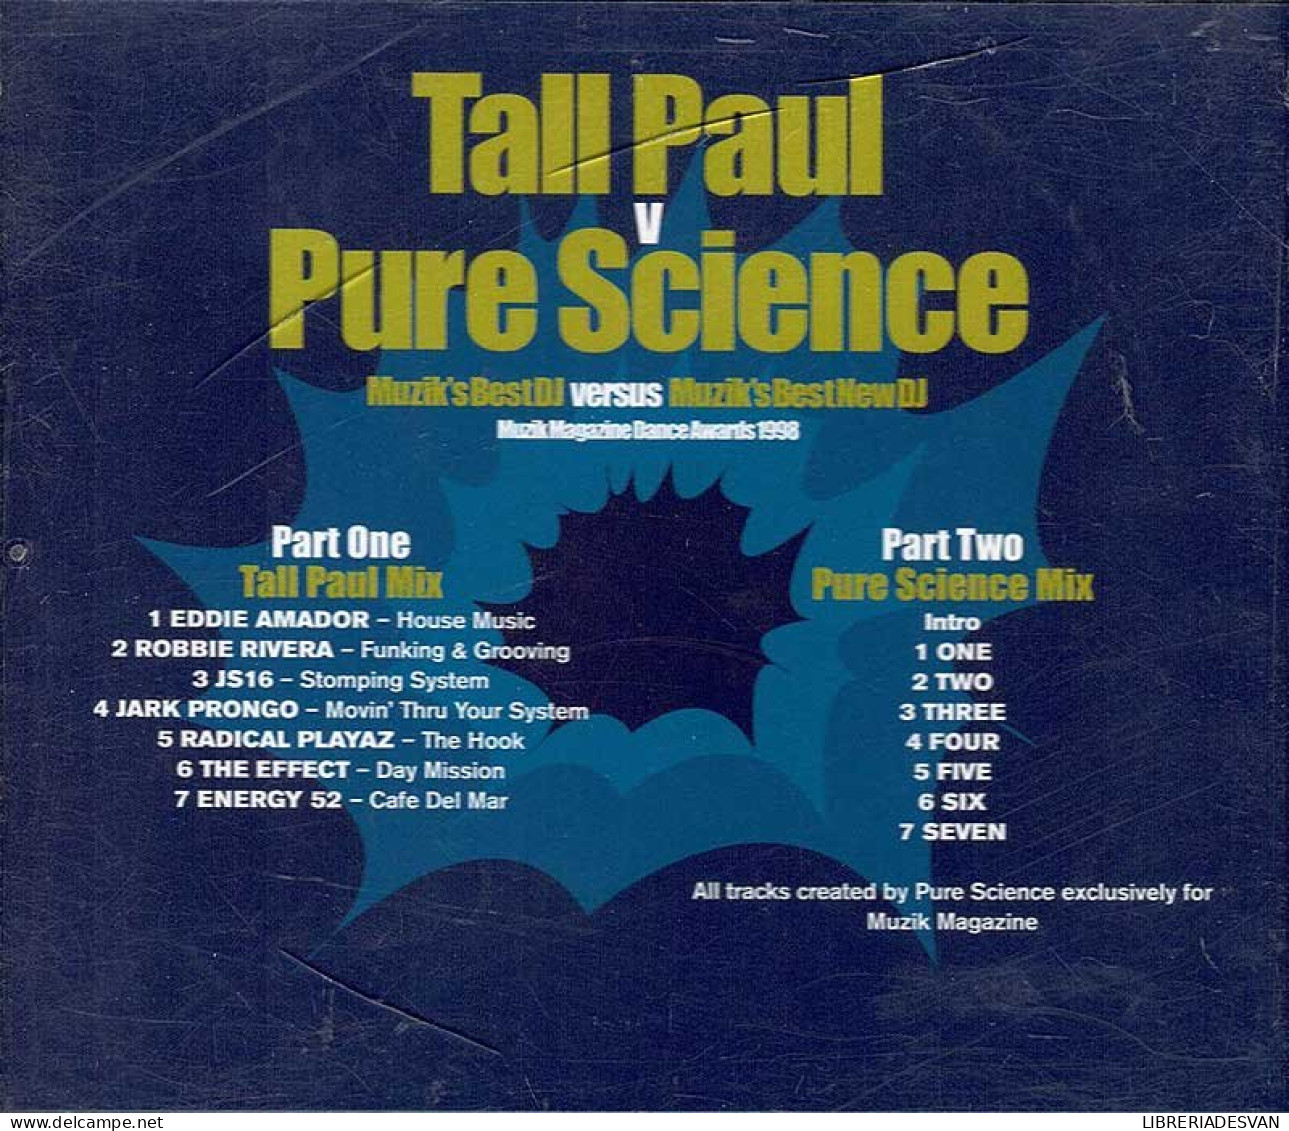 Tall Paul Vs Pure Science - Muzik's Best DJ Versus Muzik's Best New DJ. CD - Dance, Techno & House